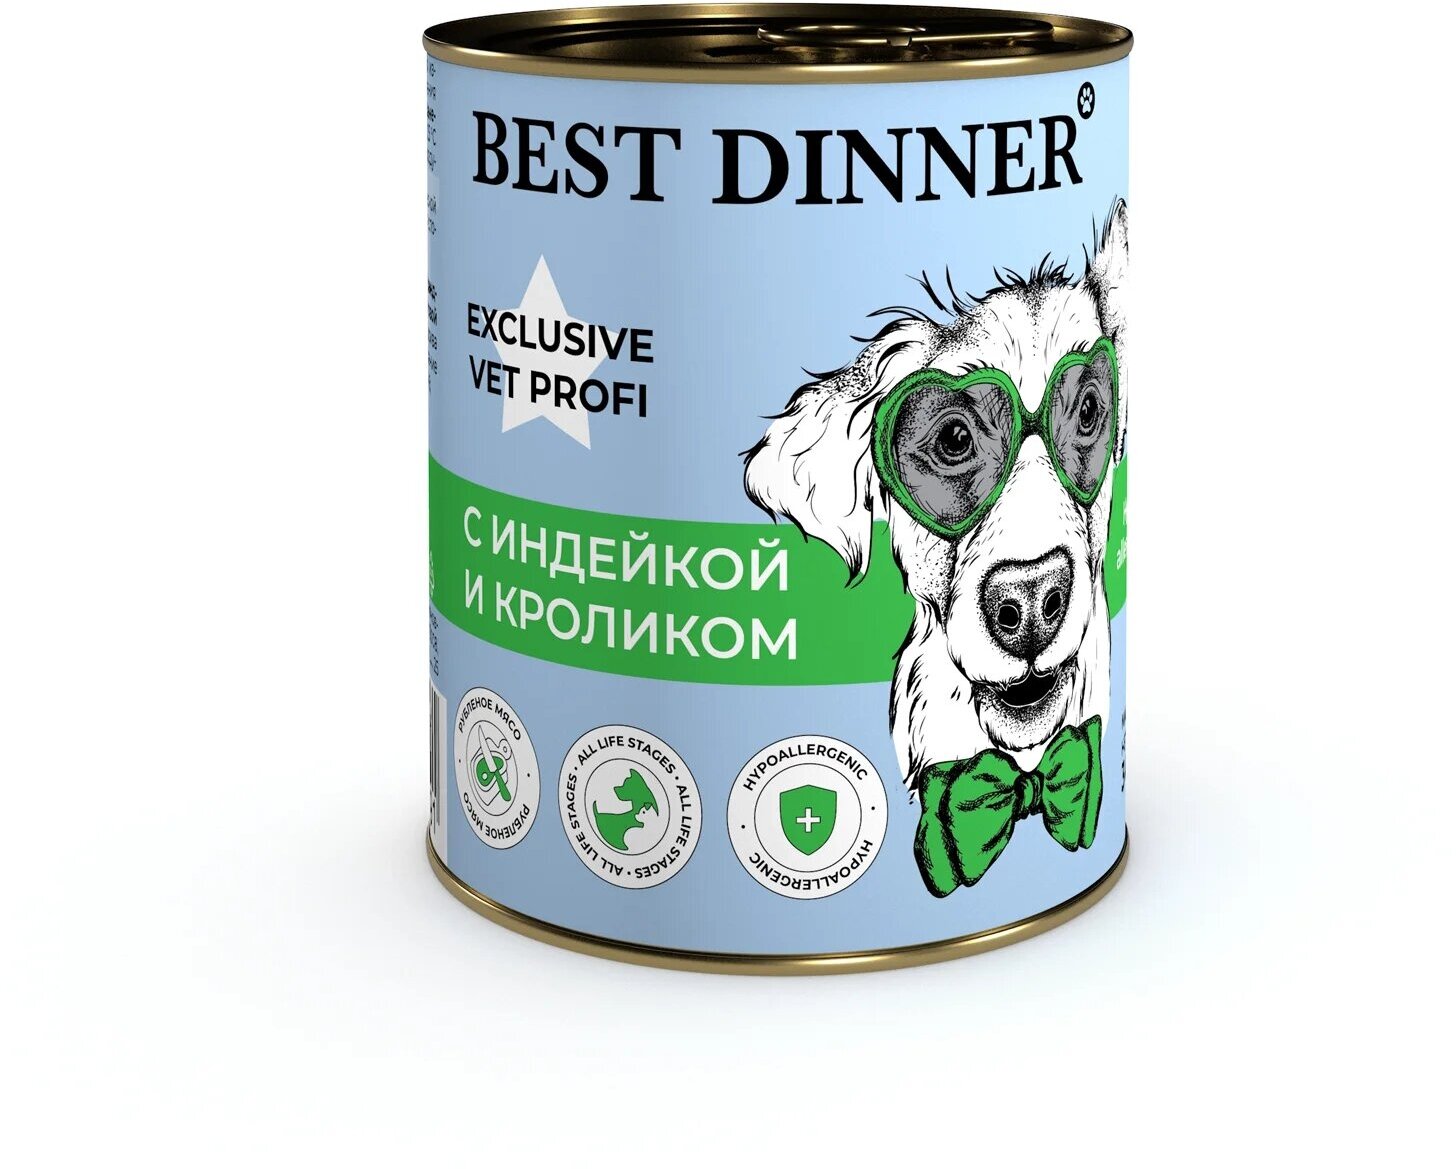 Best Dinner Vet Profi Exclusive Hypoallergenic 340г индейка с кроликом консервы для собак